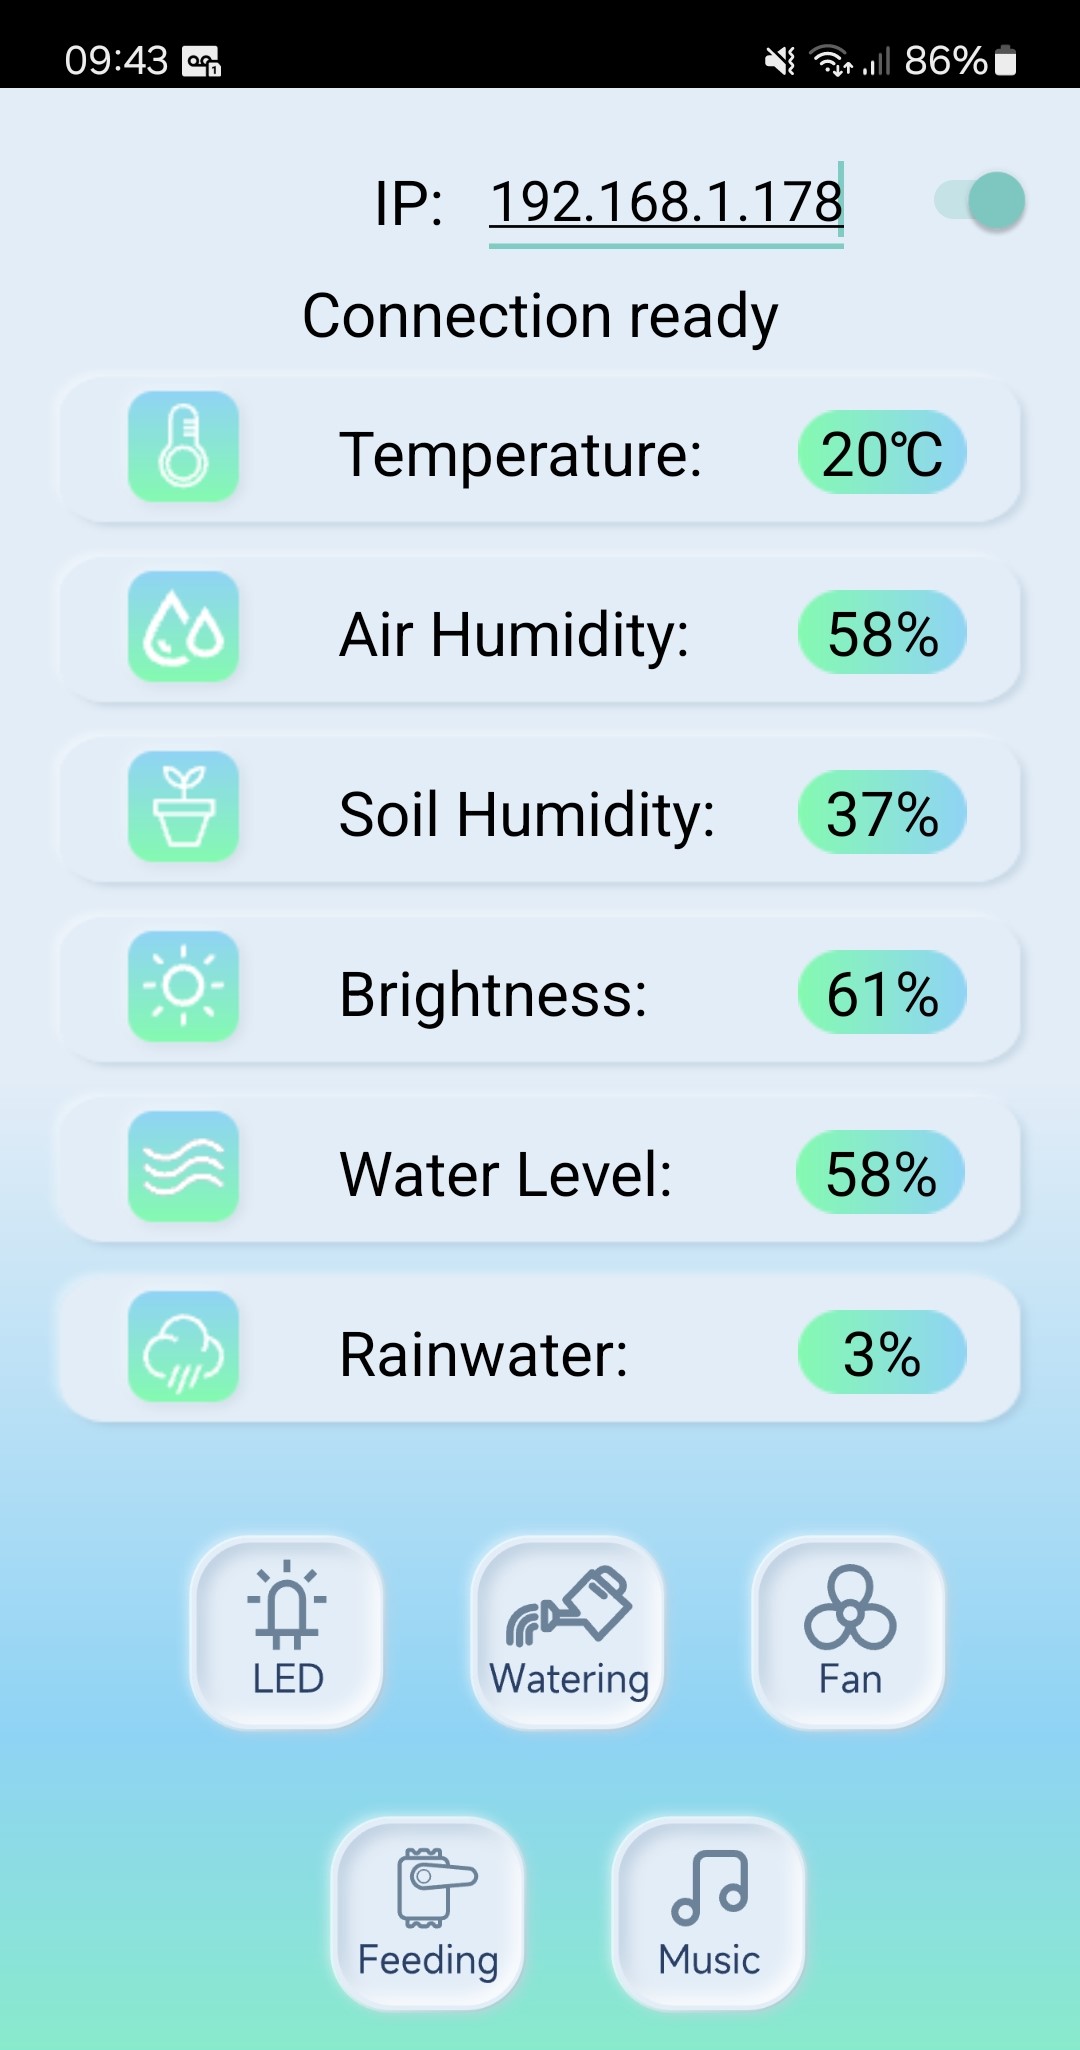 Soil Humidity Correct in App